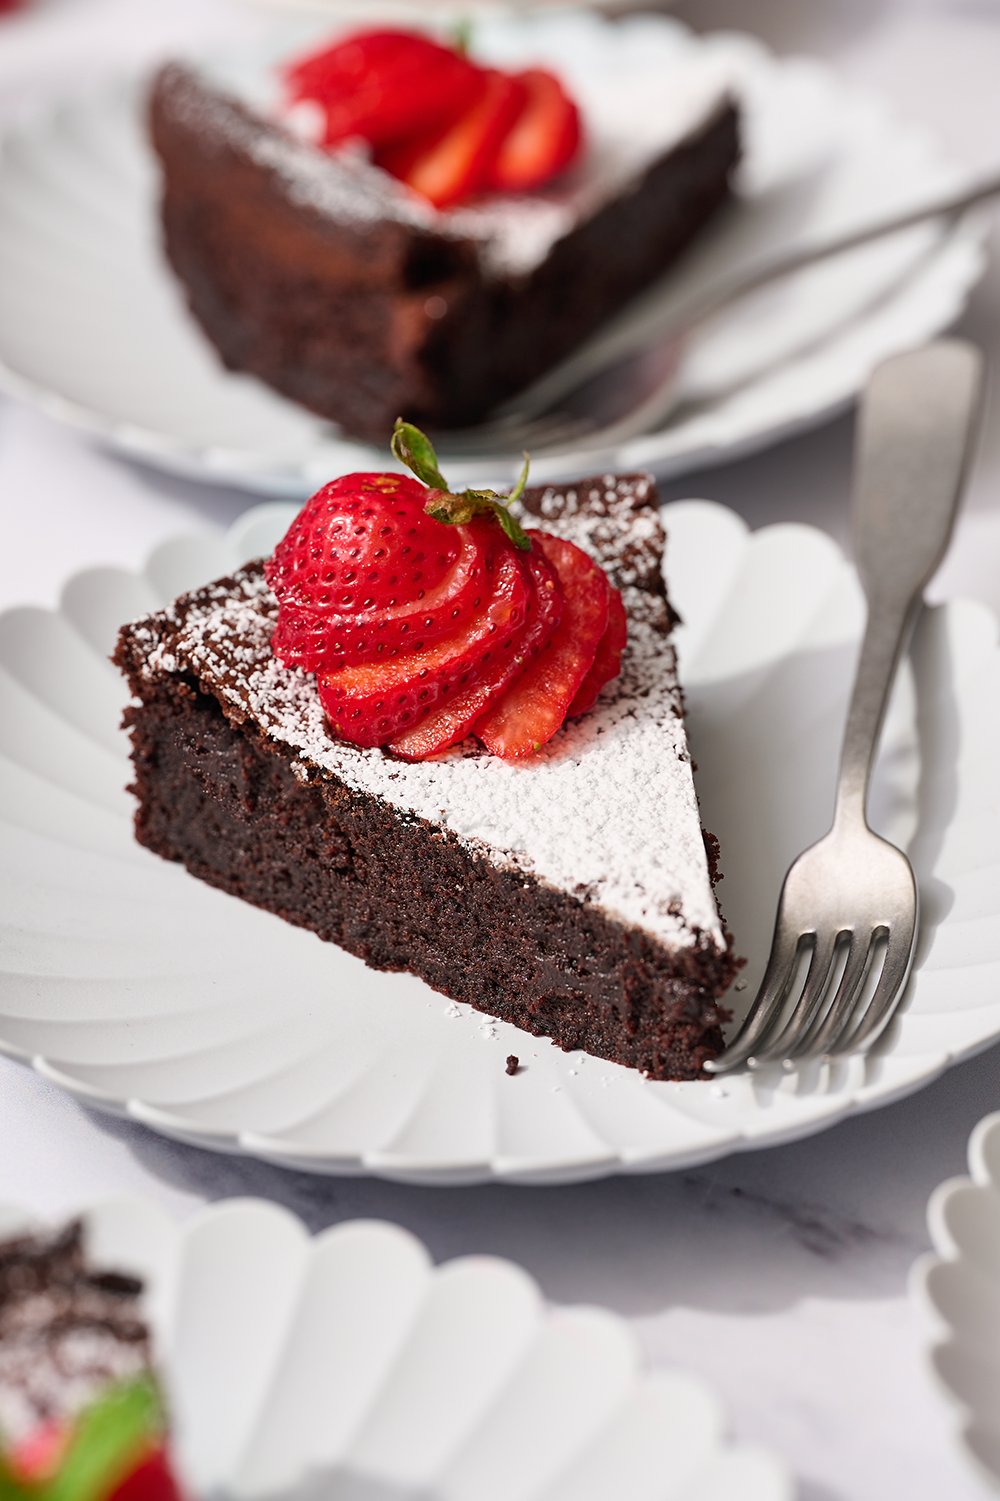 https://handletheheat.com/wp-content/uploads/2009/05/easy-flourless-chocolate-cake.jpg